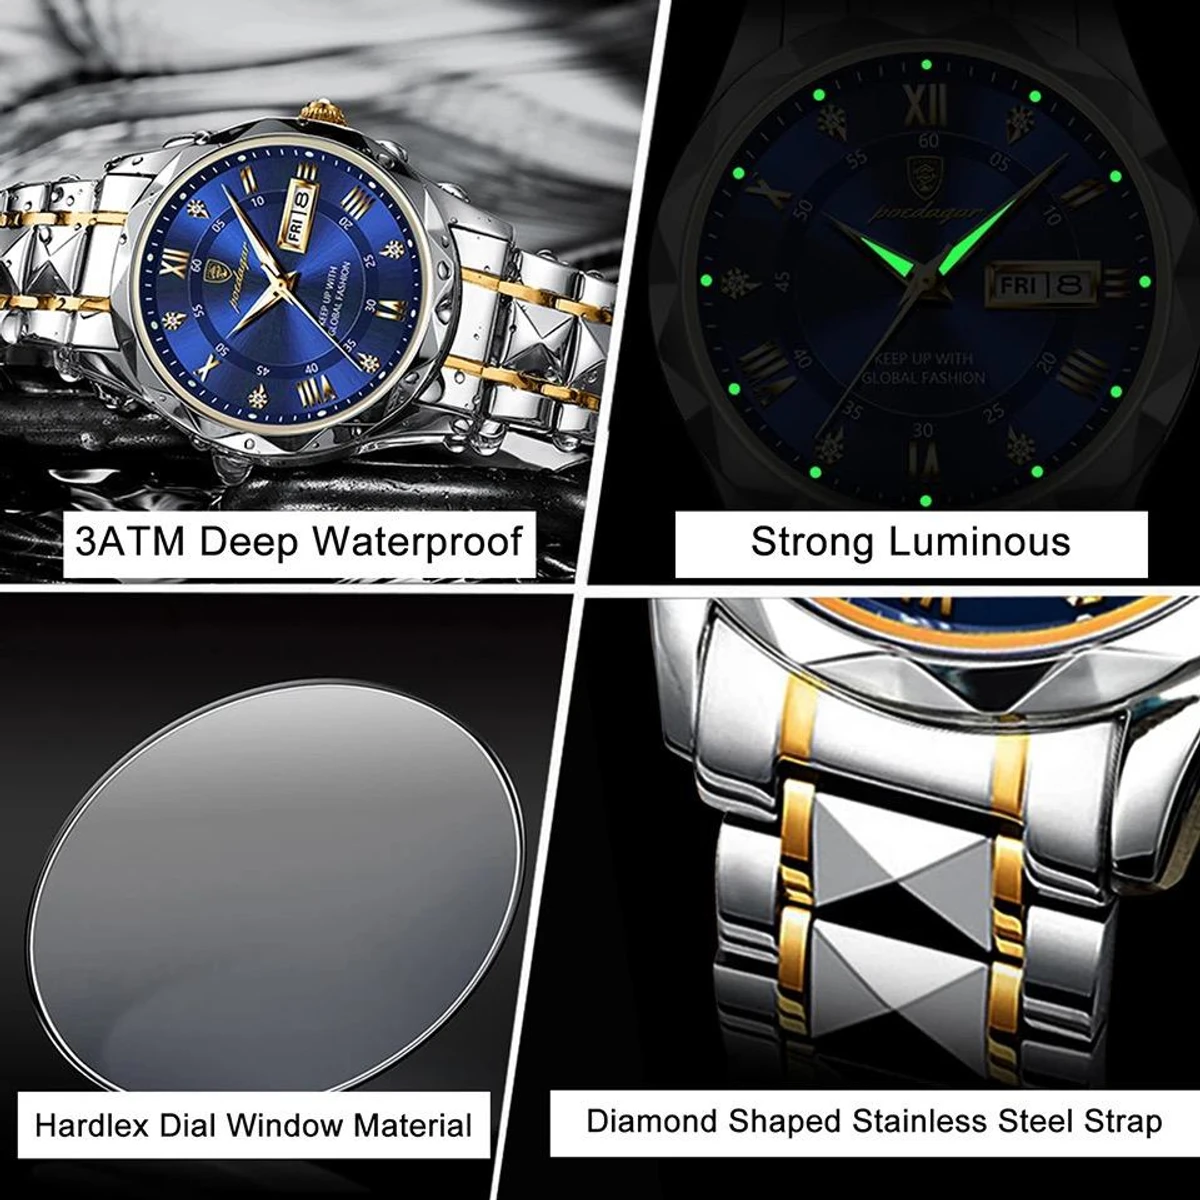 POEDAGAR Brand Fashion Mens Watch Luxury Top Business Stainless Steel Waterproof Wristwatches Male Sport Luminous Date Man Clock- Blue